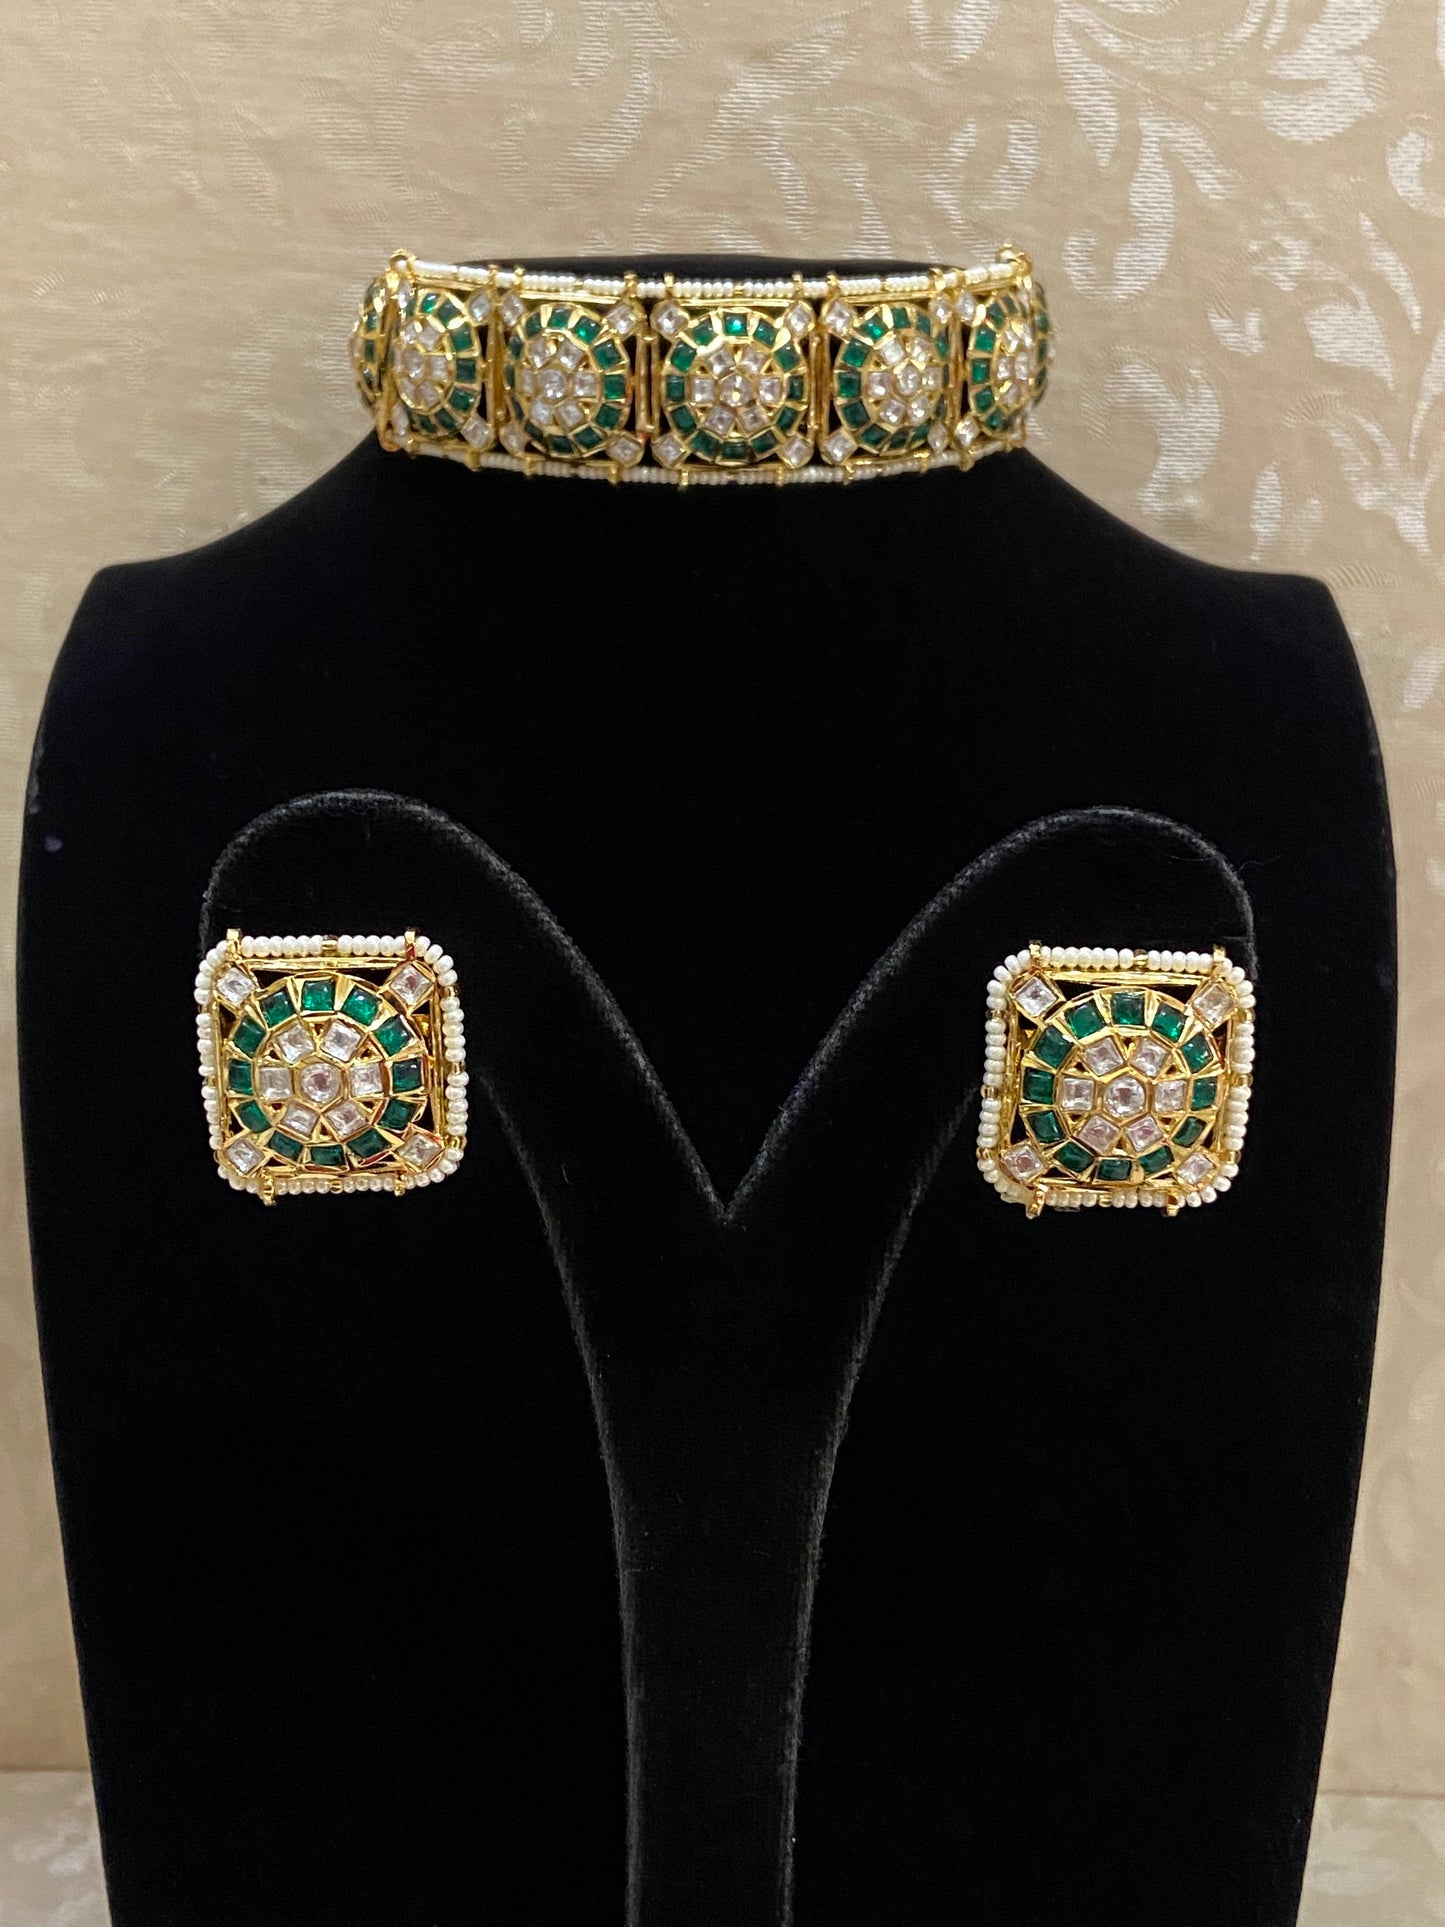 Jadau kundan choker | Bollywood jewelry | Indian jewelry